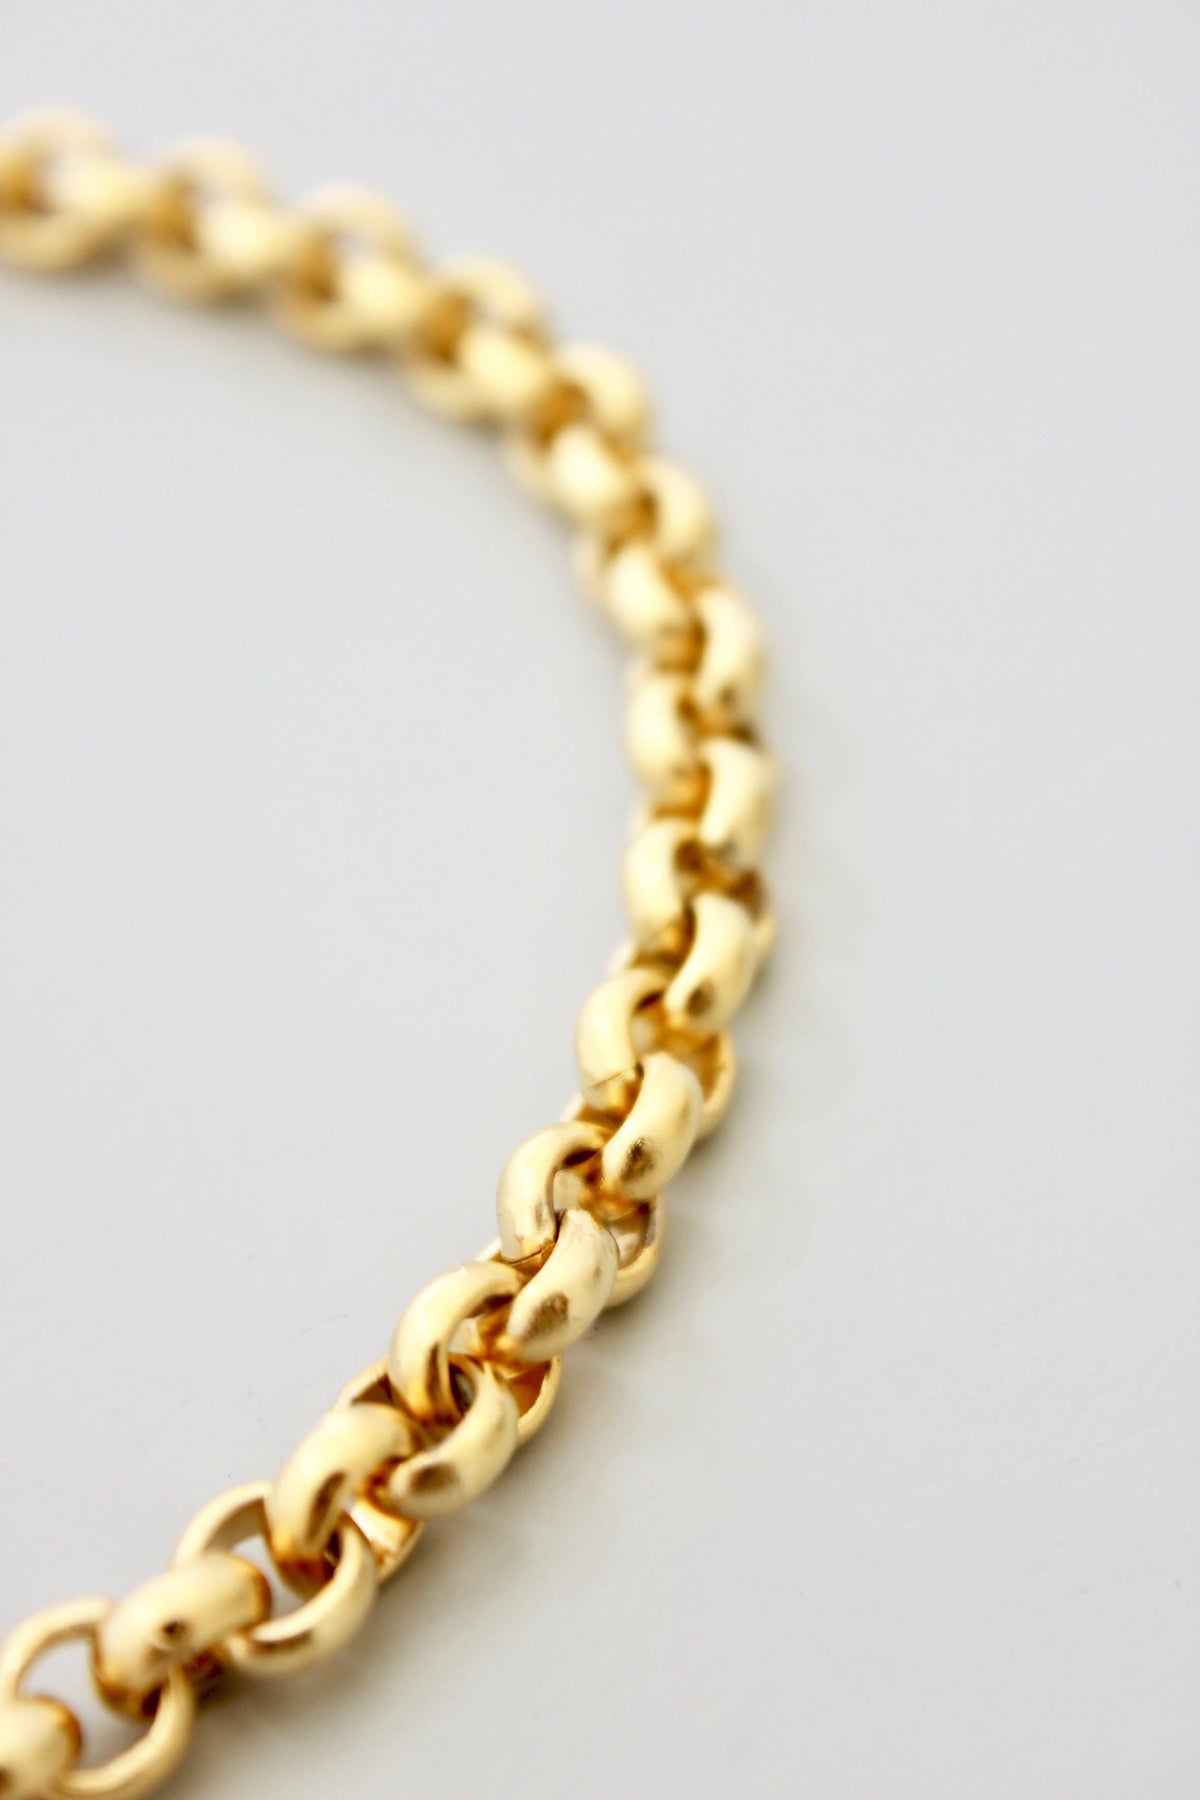 David Aubrey Gold Rolo Chain Necklace 22"